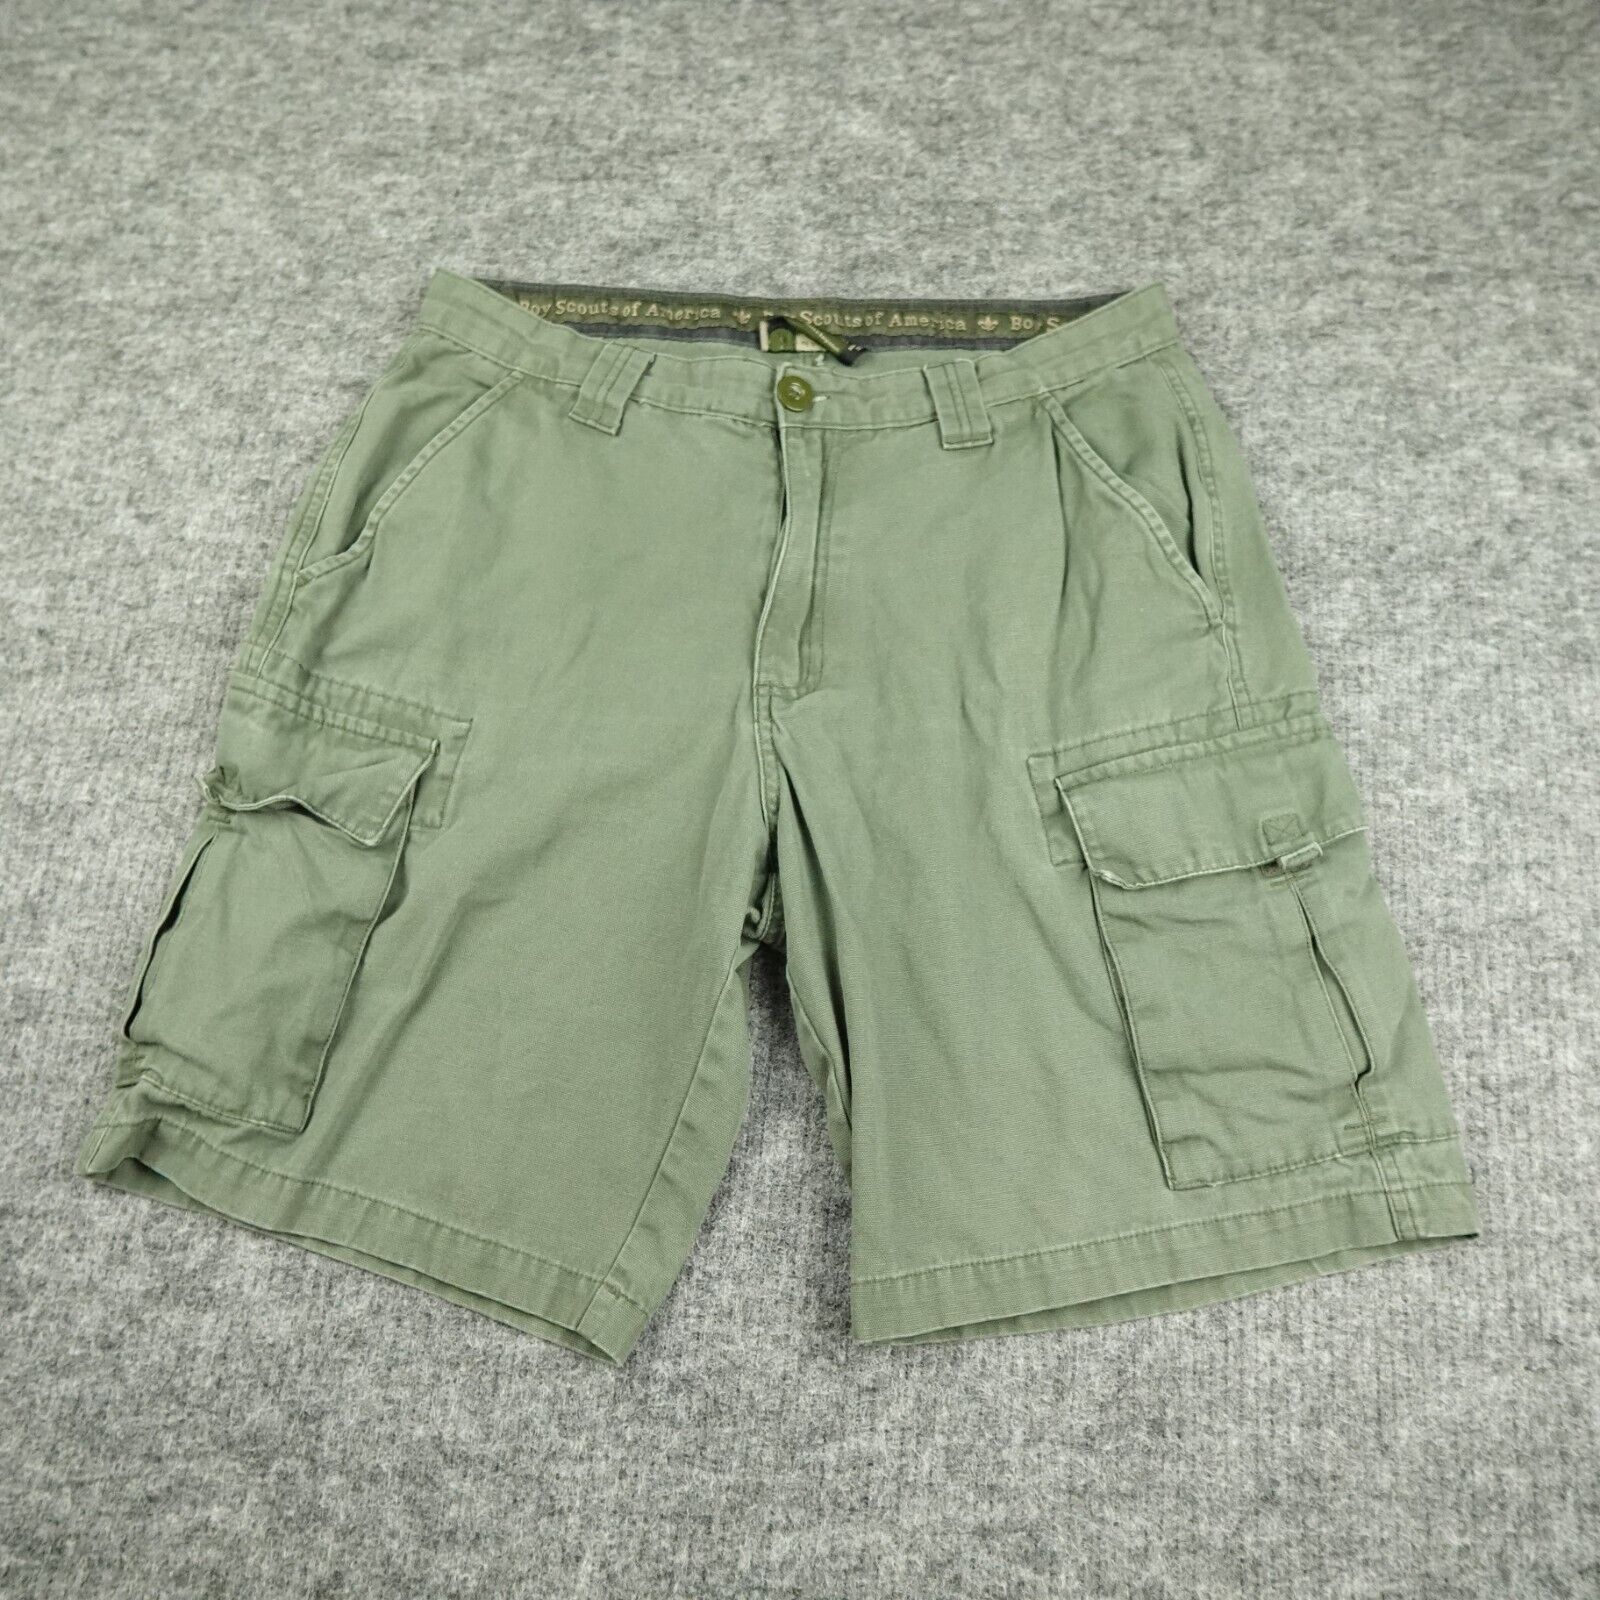 Boy Scouts Of America Shorts Mens 32 Green Cargo Pockets Uniform Outdoors Canva-